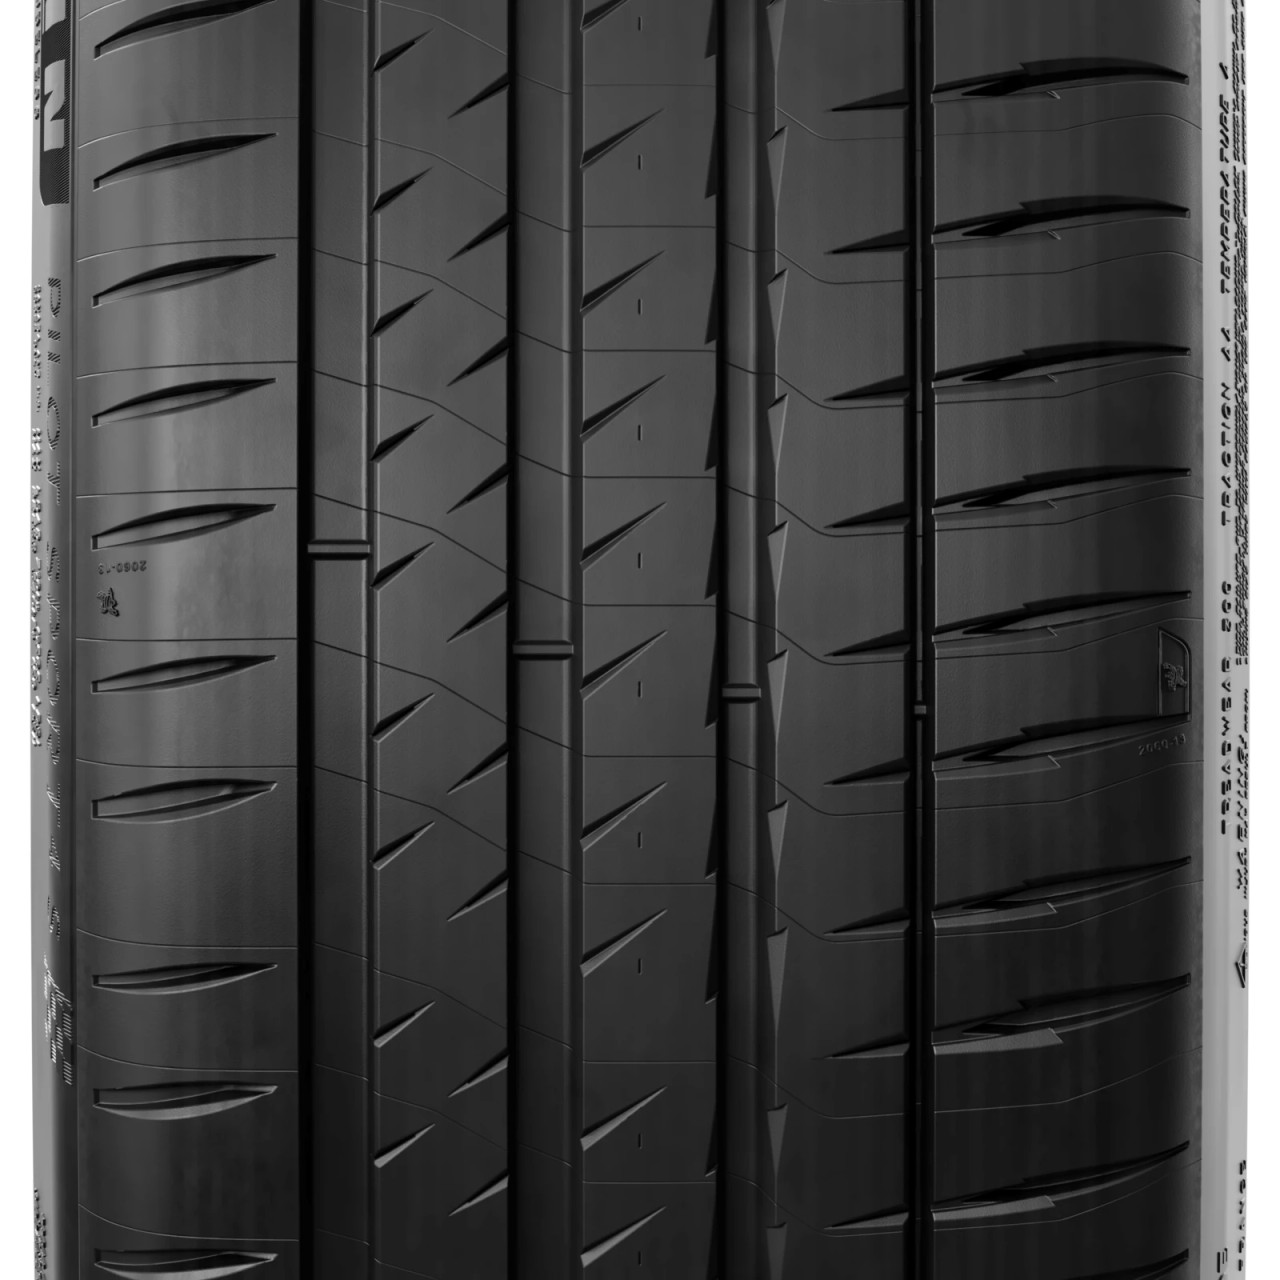 Michelin Pilot Sport 4S 245/35ZR19 (93Y) XL MO1 Mercedes Tire